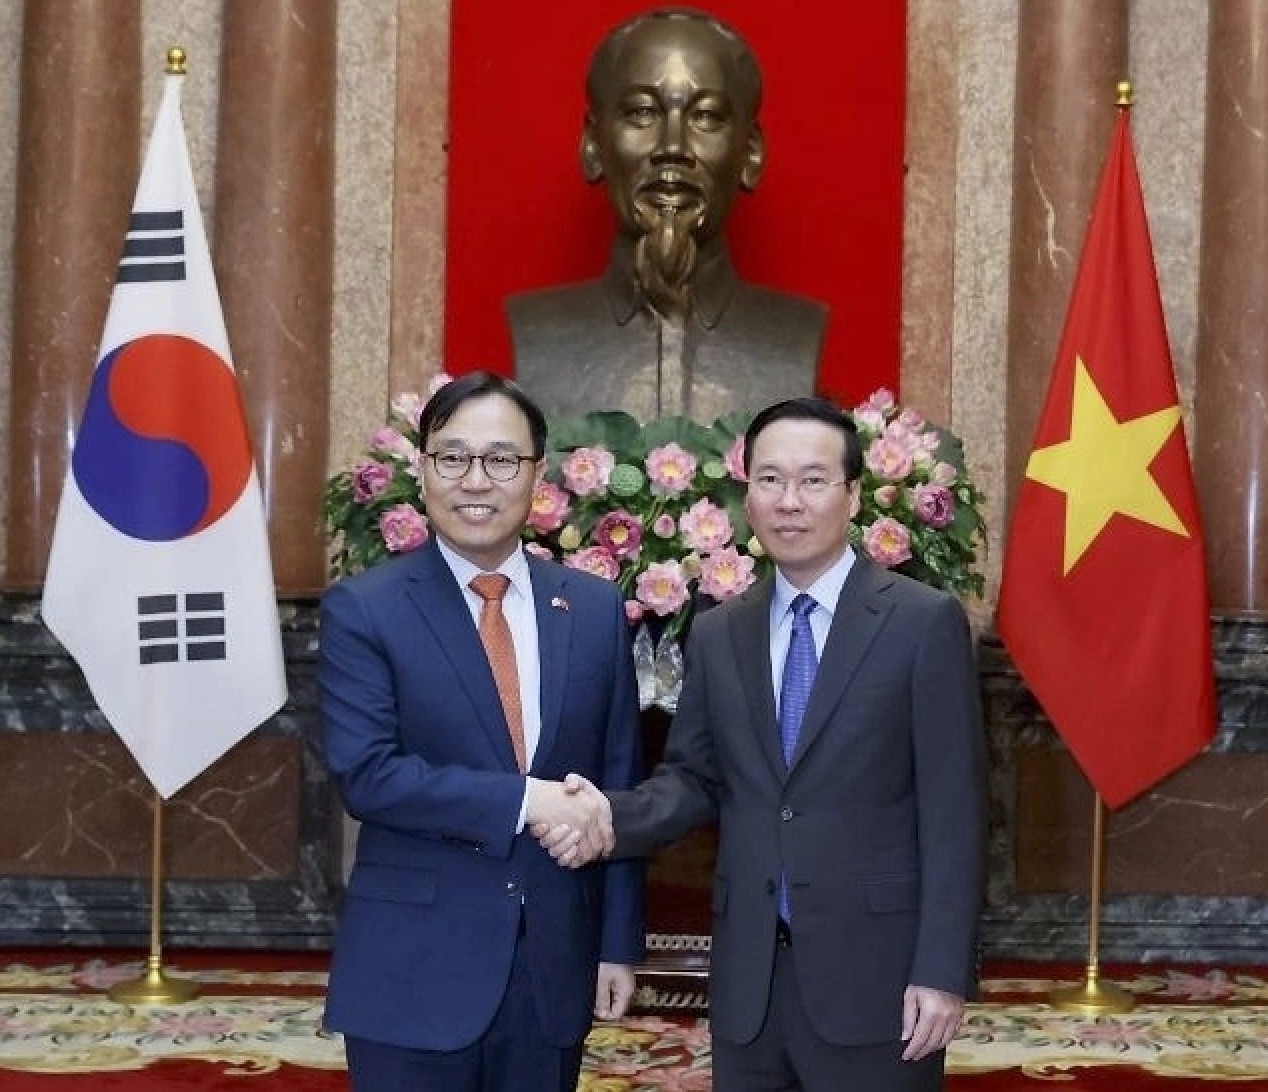 Vietnam News Today (Jan. 25): RoK Ambassador Positive on Relations With Vietnam